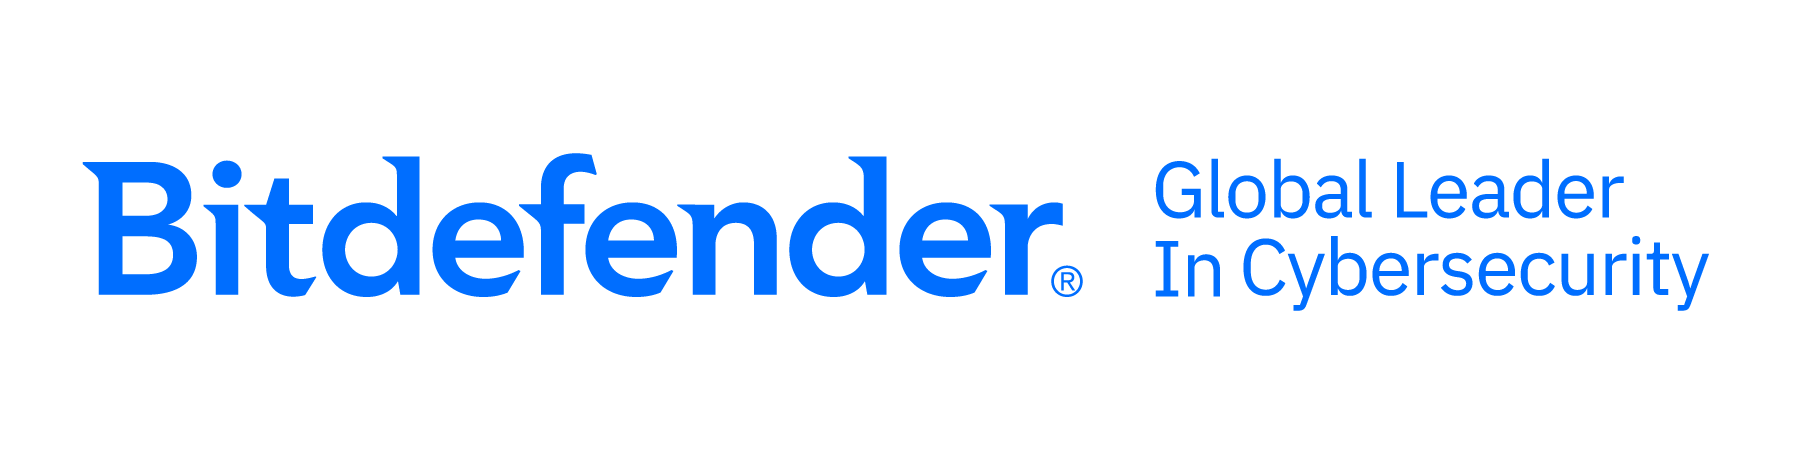 Bitdefender_Masterbrand_Logo_Descriptor_InLine_Positive_RGB-1-1